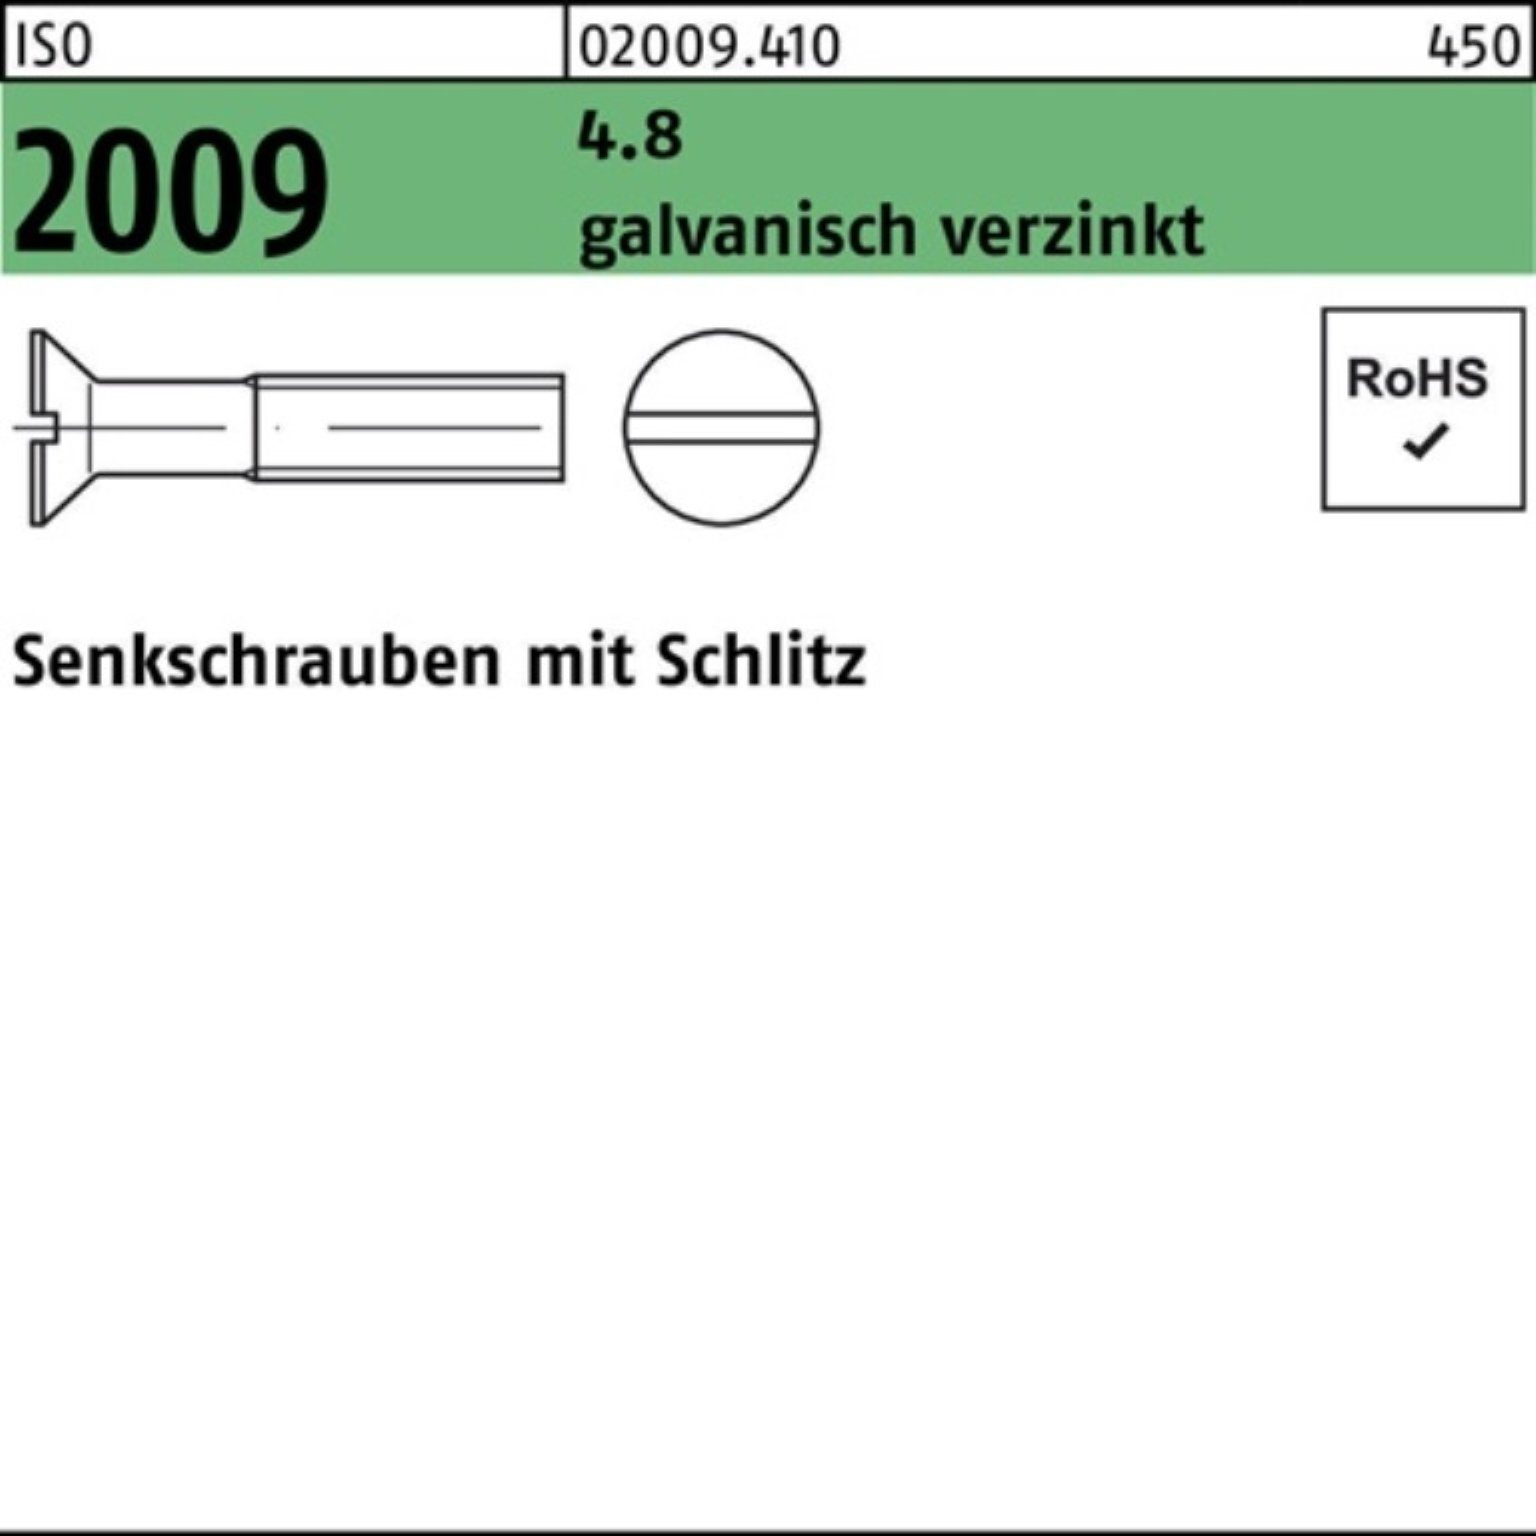 Pack St Senkschraube 70 M20x Reyher 25 Senkschraube galv.verz. ISO 4.8 2009 100er Schlitz